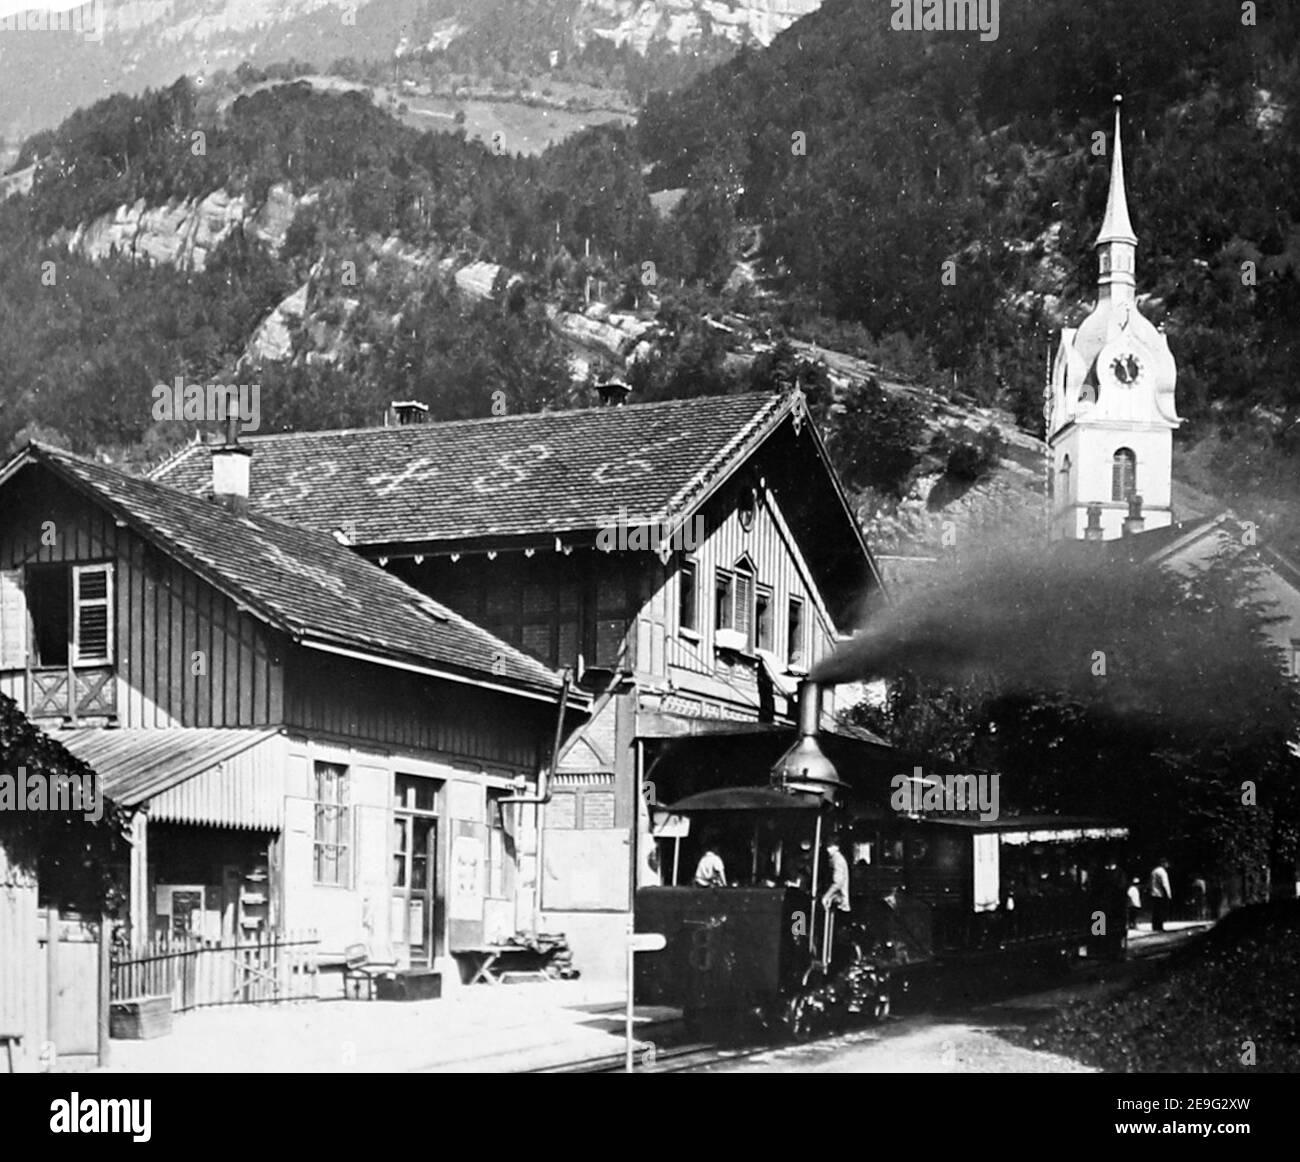 Vitznau Bahnhof, Schweiz, viktorianische Zeit Stockfotografie - Alamy